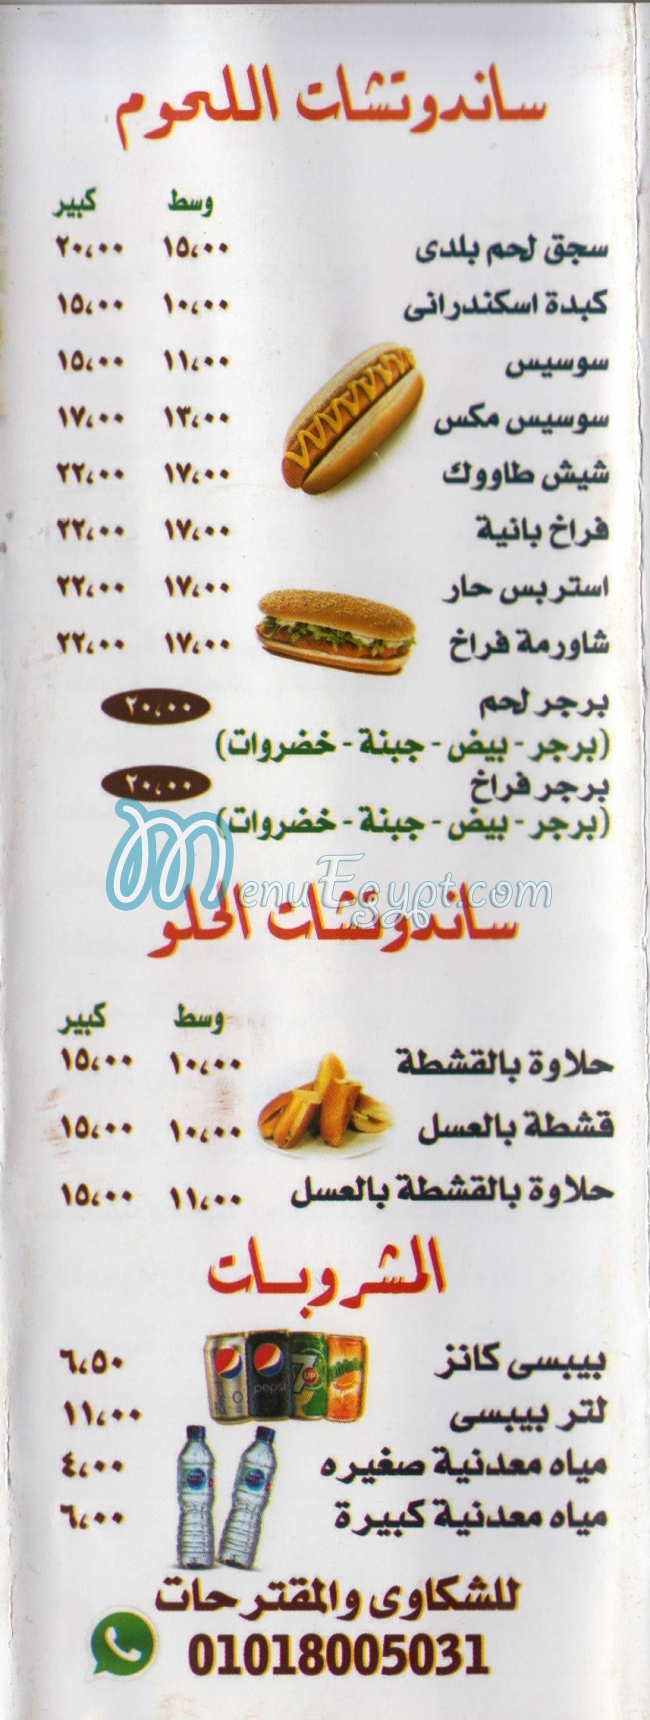 Abo Ali menu